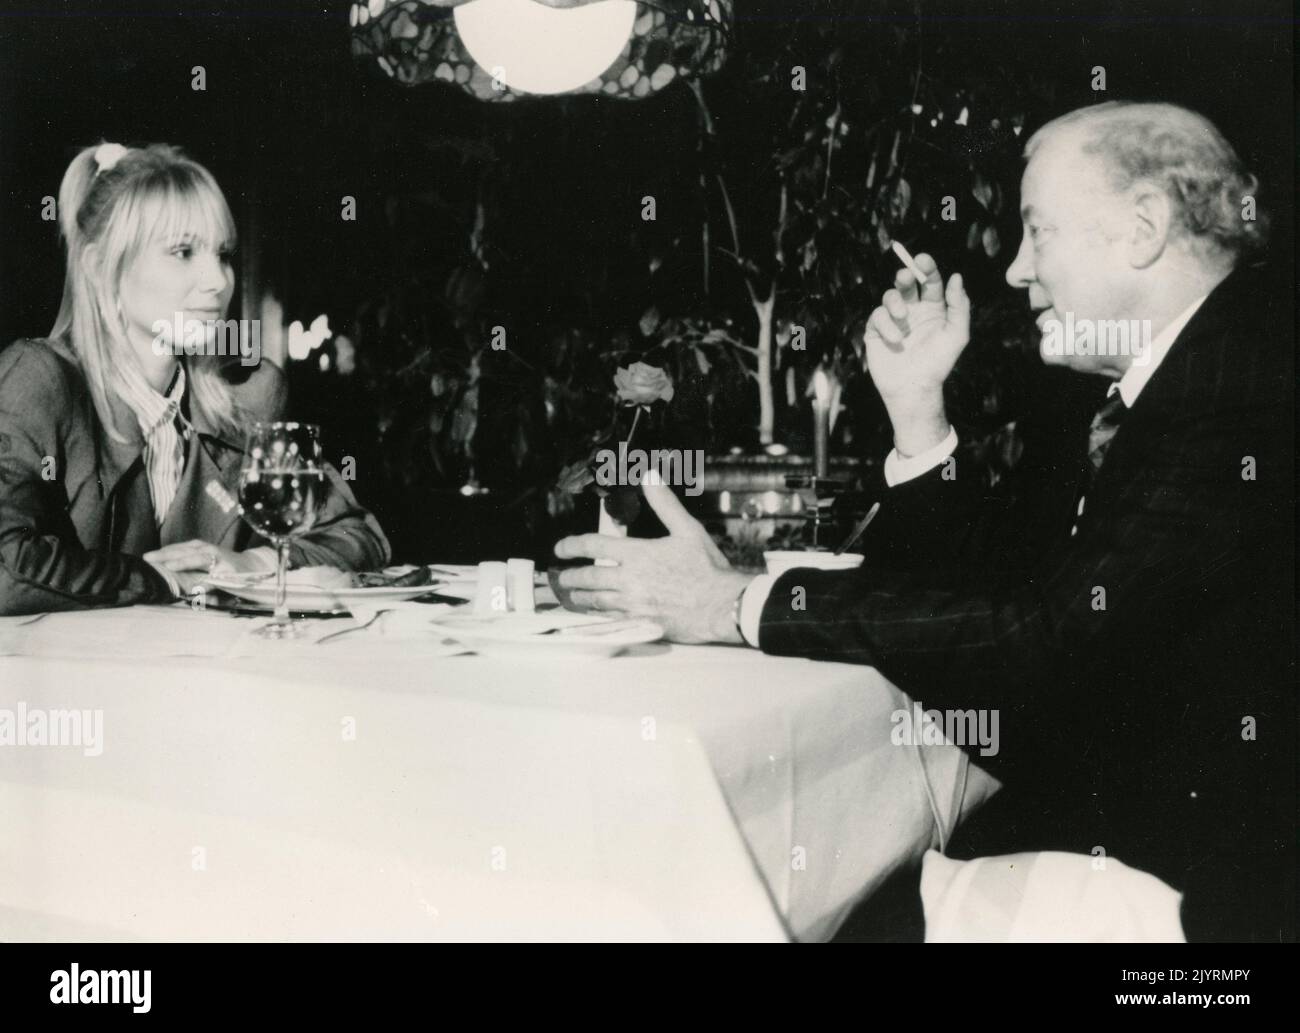 L'attrice tedesca Dolly Dollar aka Christine Zierl e l'attore Jochen Siedhoff nel programma televisivo Fragen Sie Frau Dr. Cora, Germania 1989 Foto Stock